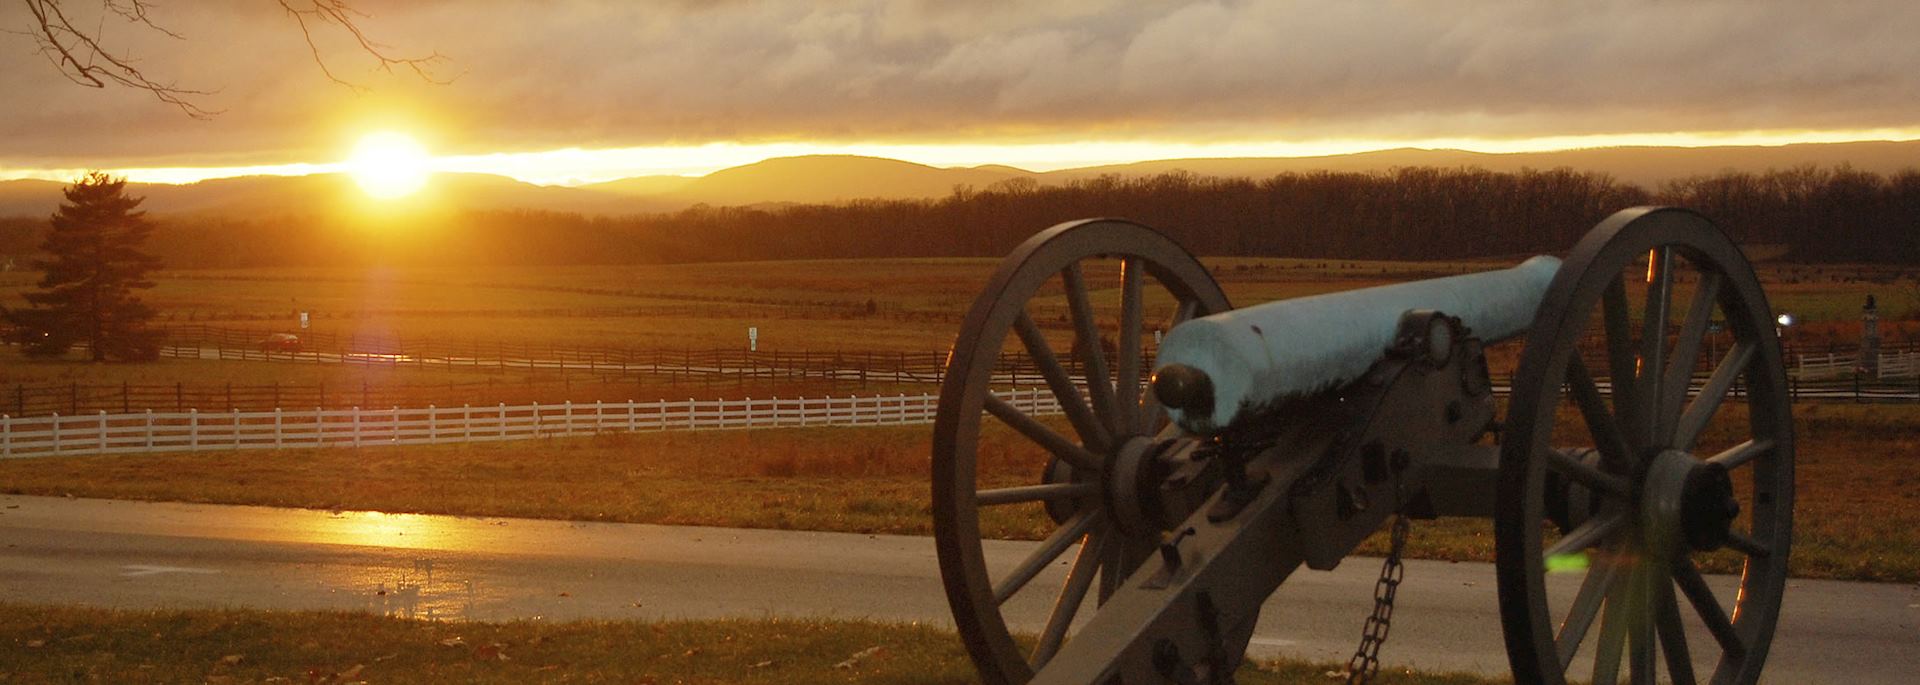 The battlefield of Gettysburg